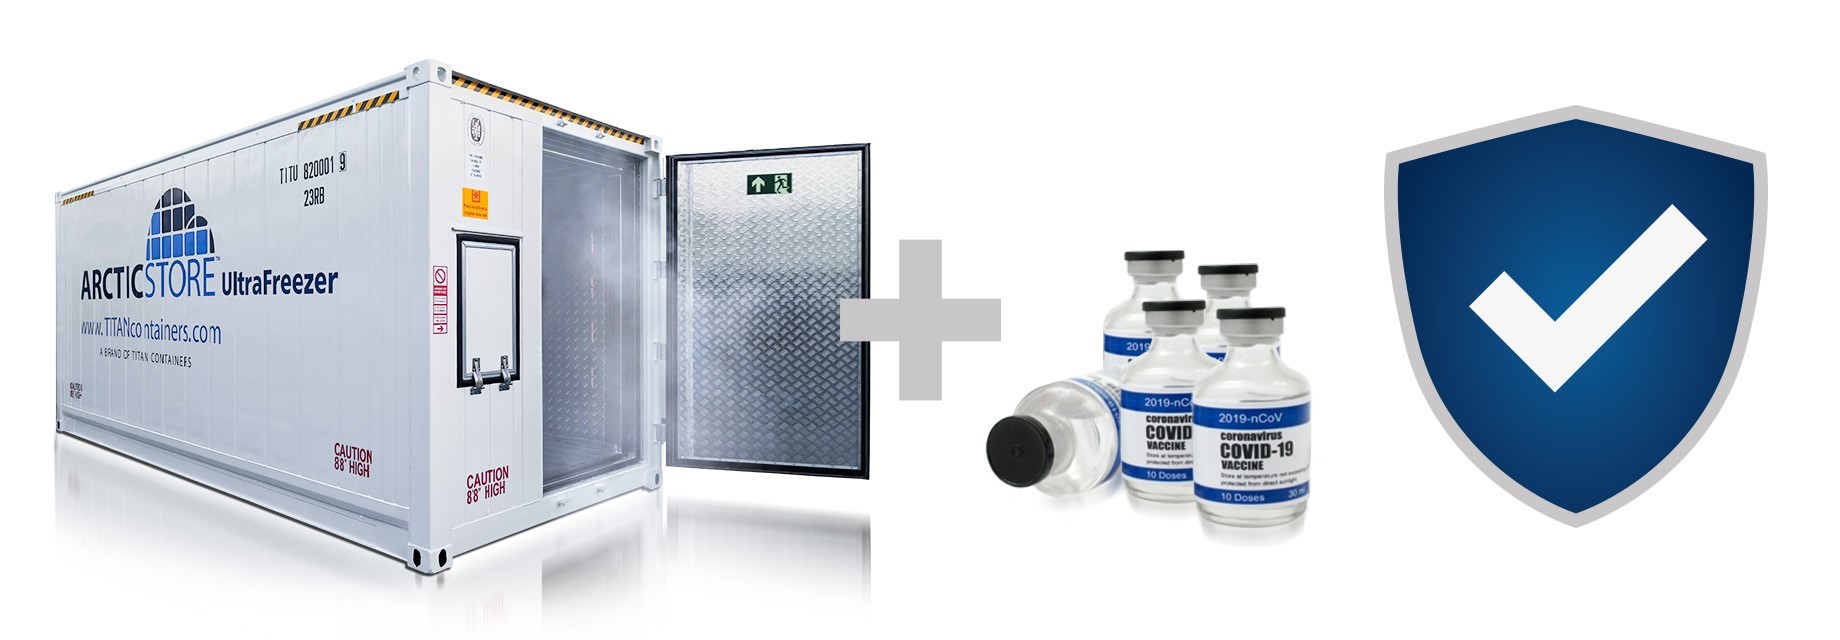 Pfizer-Biontech Vaccine Storage Solutions Hull West